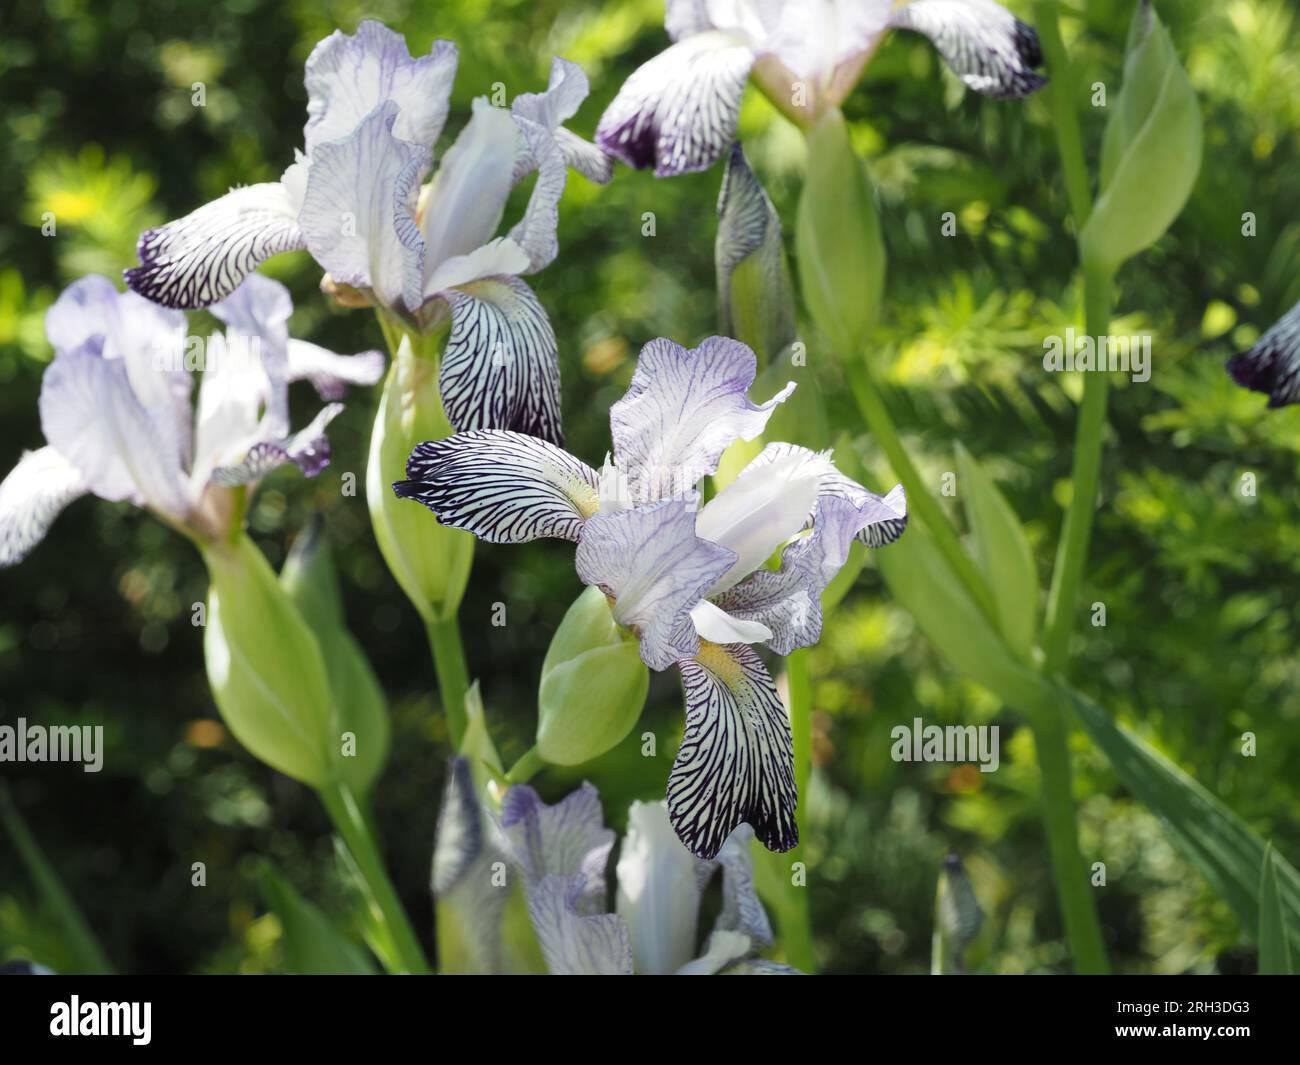 Garden of Variegata Reginae Bearded Irises. Family: Iridaceae. Order: Asparagales. Kingdom: Plantae. Stock Photo